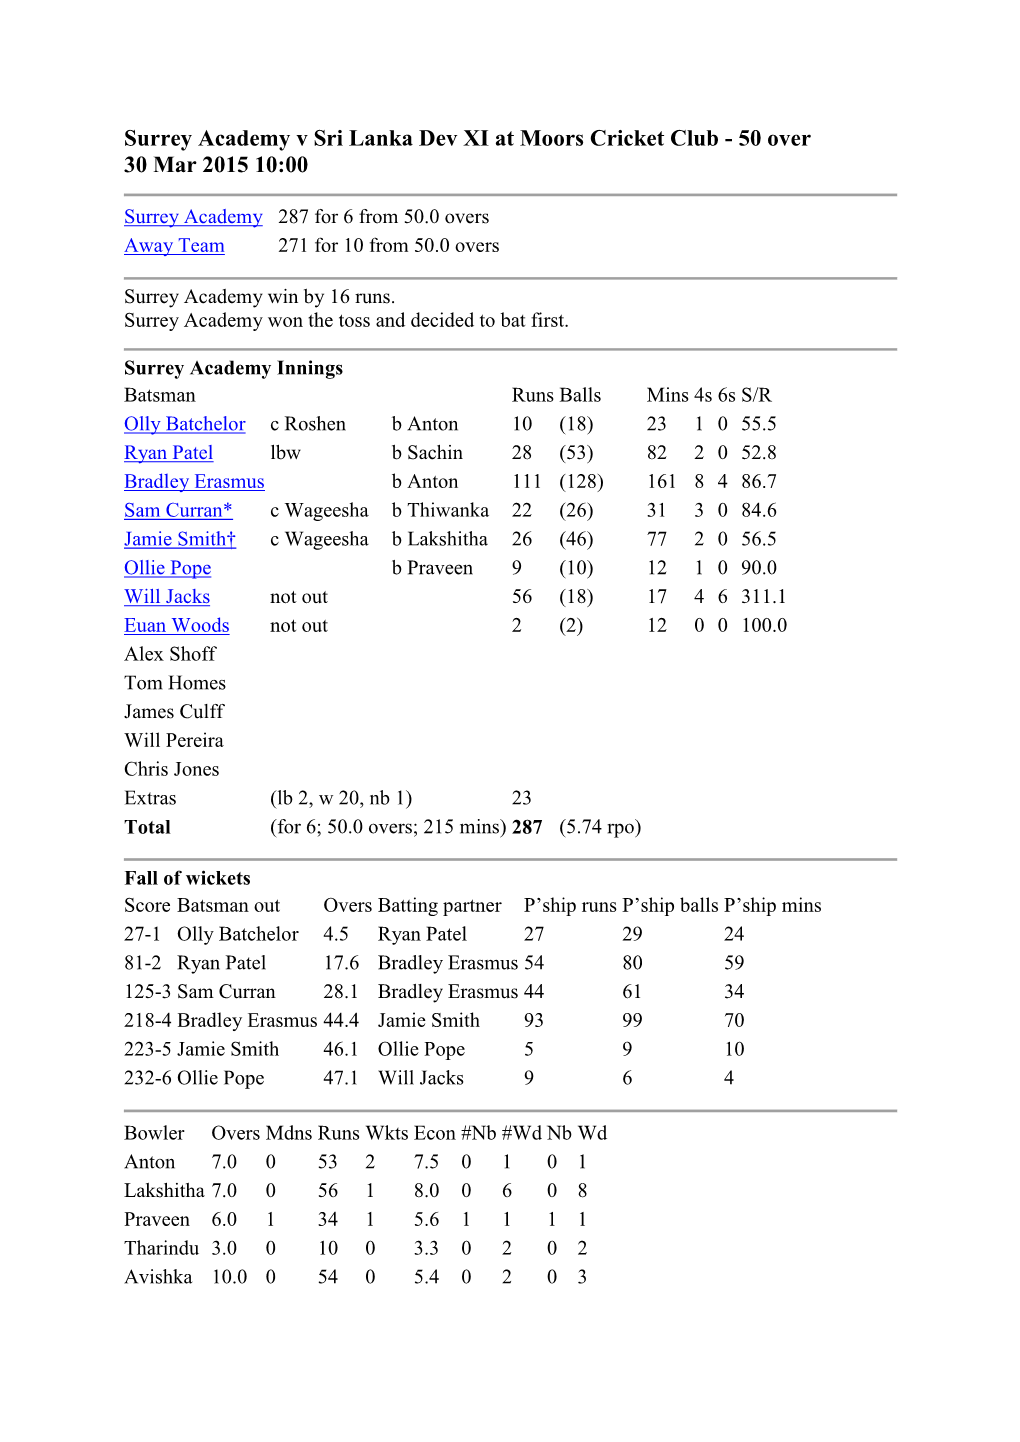 Surrey Academy V Sri Lanka Dev XI at Moors Cricket Club - 50 Over 30 Mar 2015 10:00